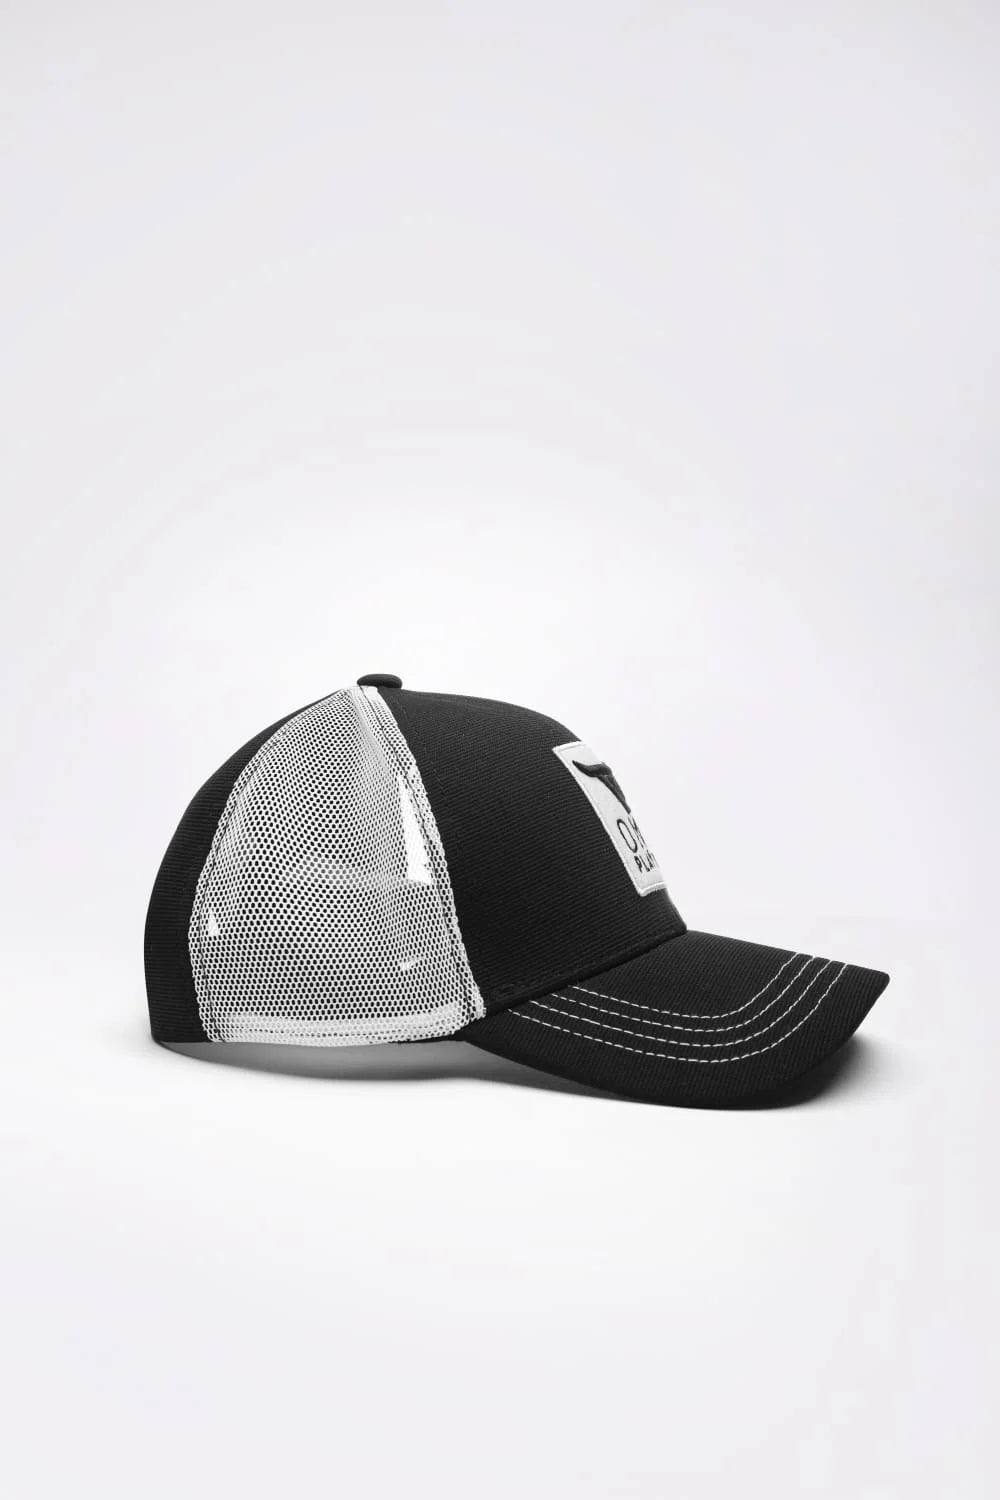 Unisex Black & White Trucker cap, has a visor by One Player